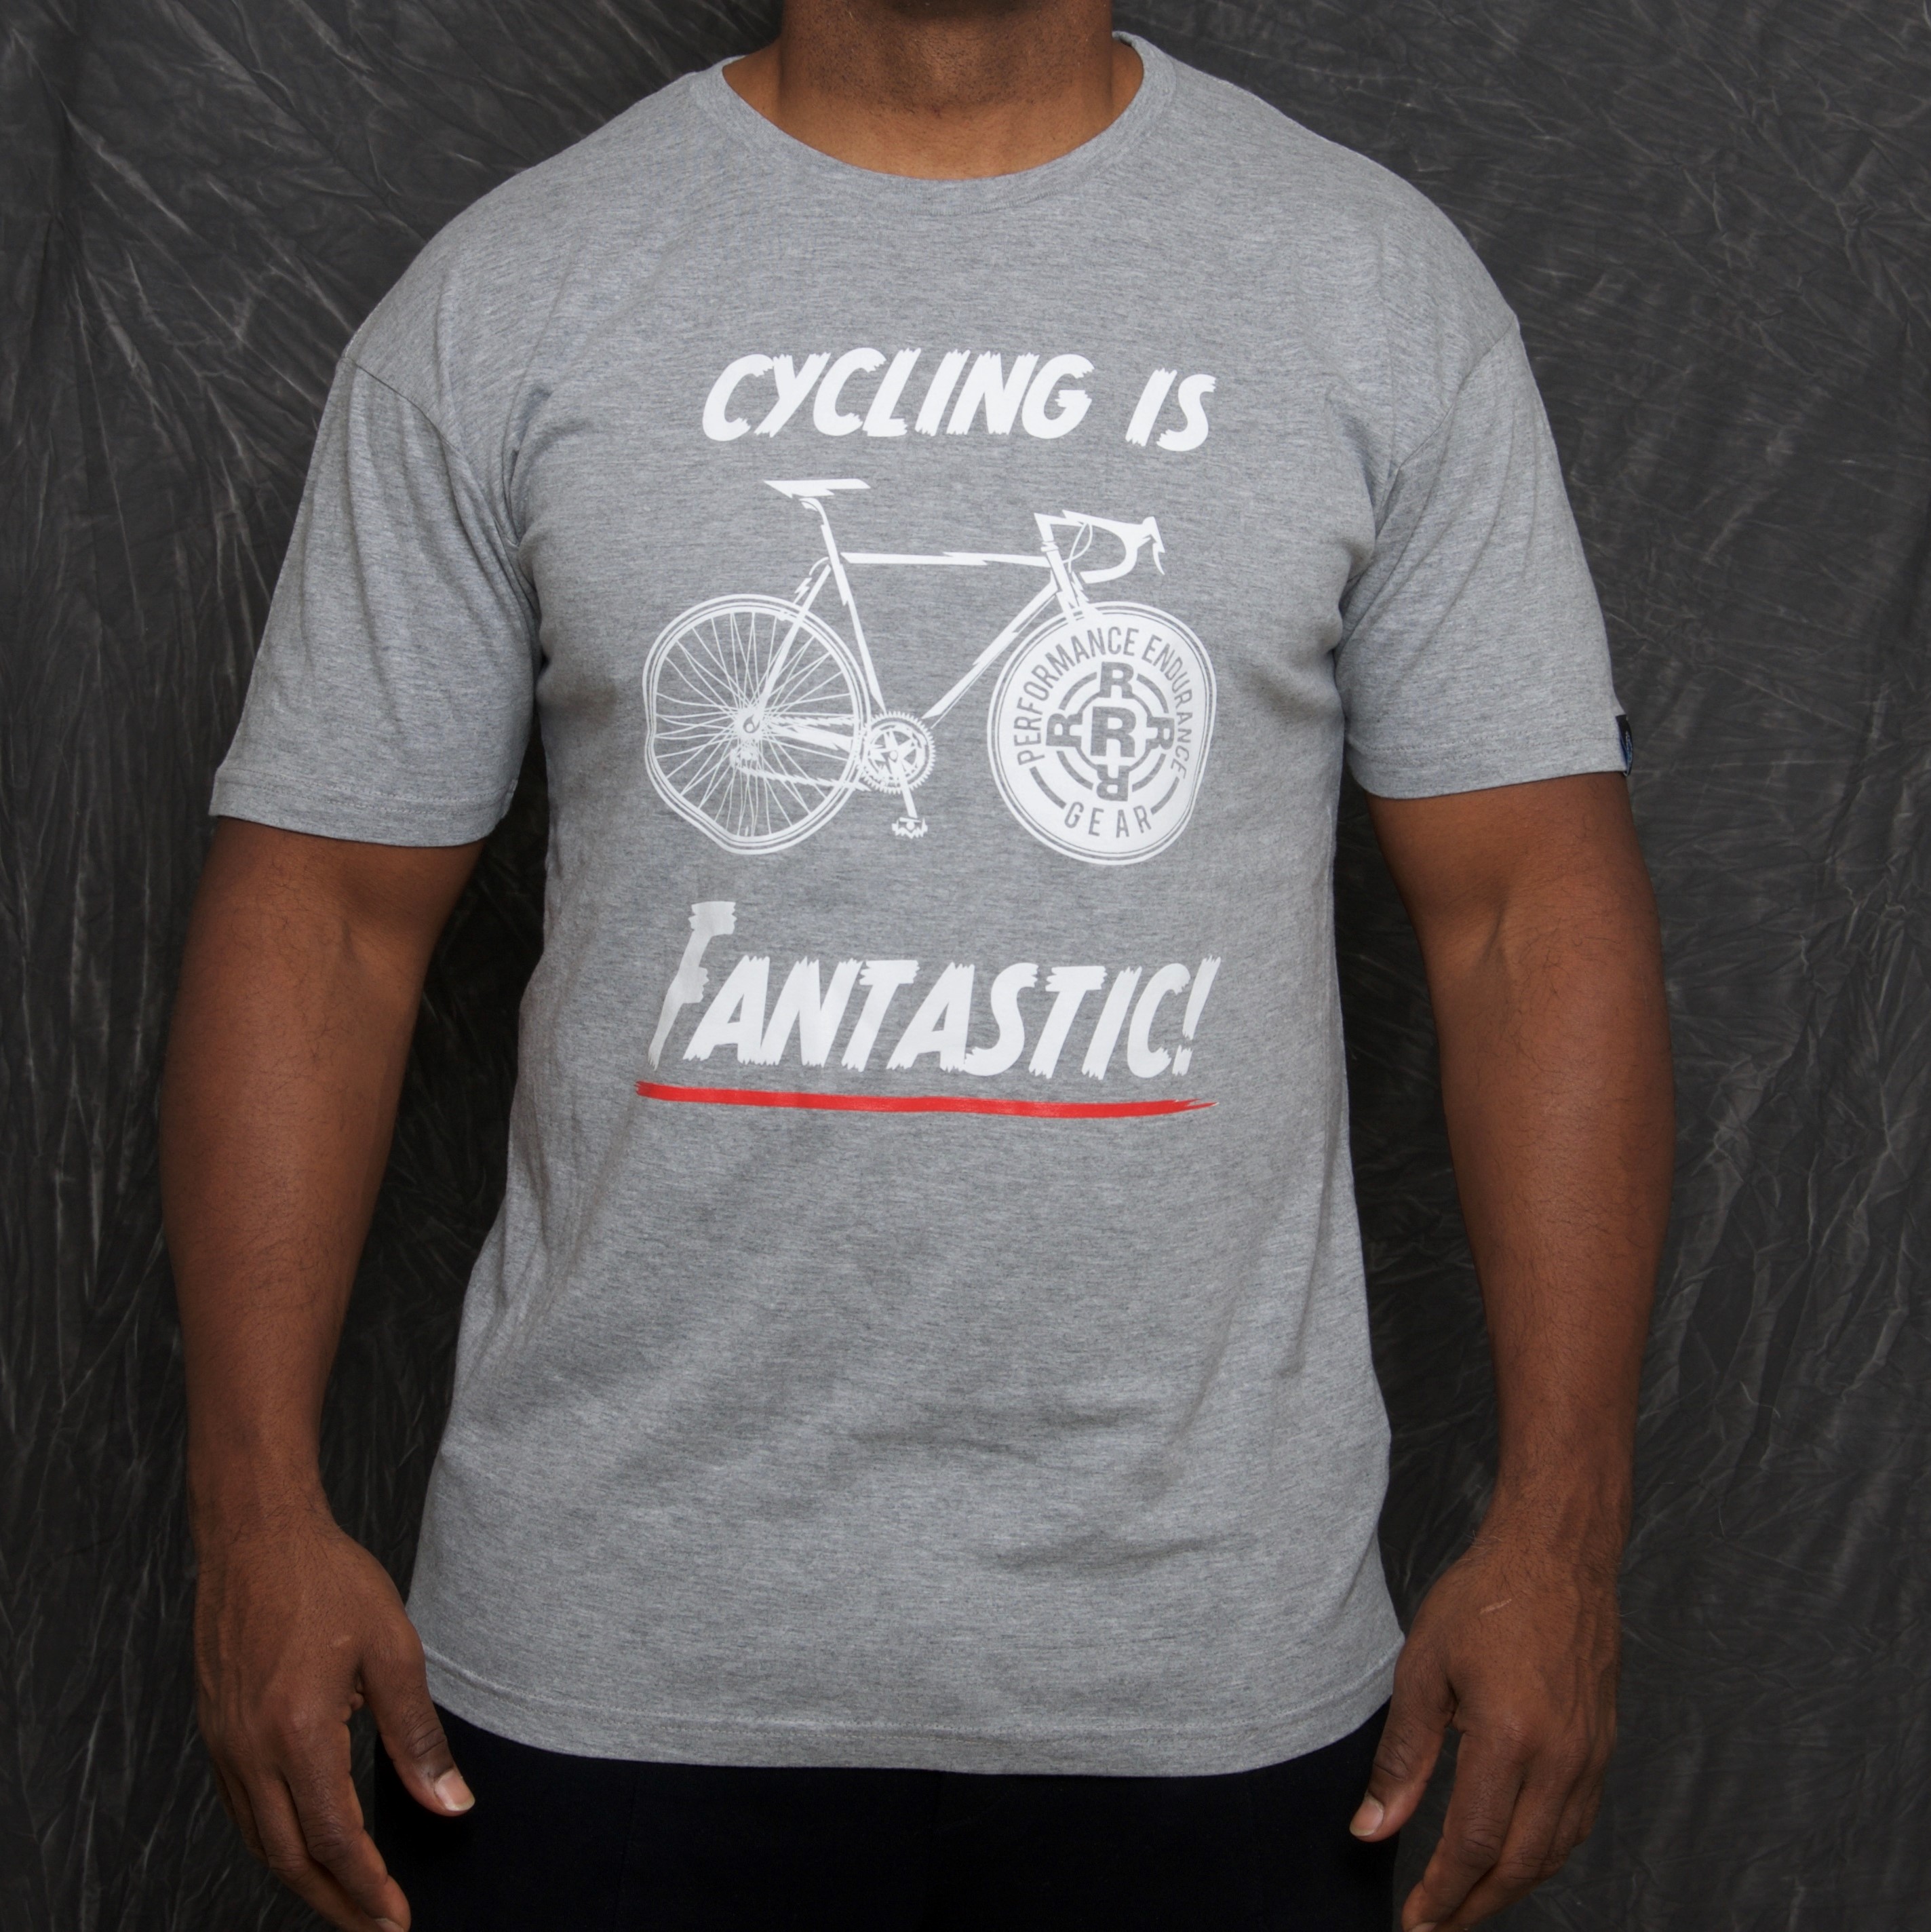 Transcend Diplomati vest Men's Fantastic cycling t-shirt - Performance Endurance Gear